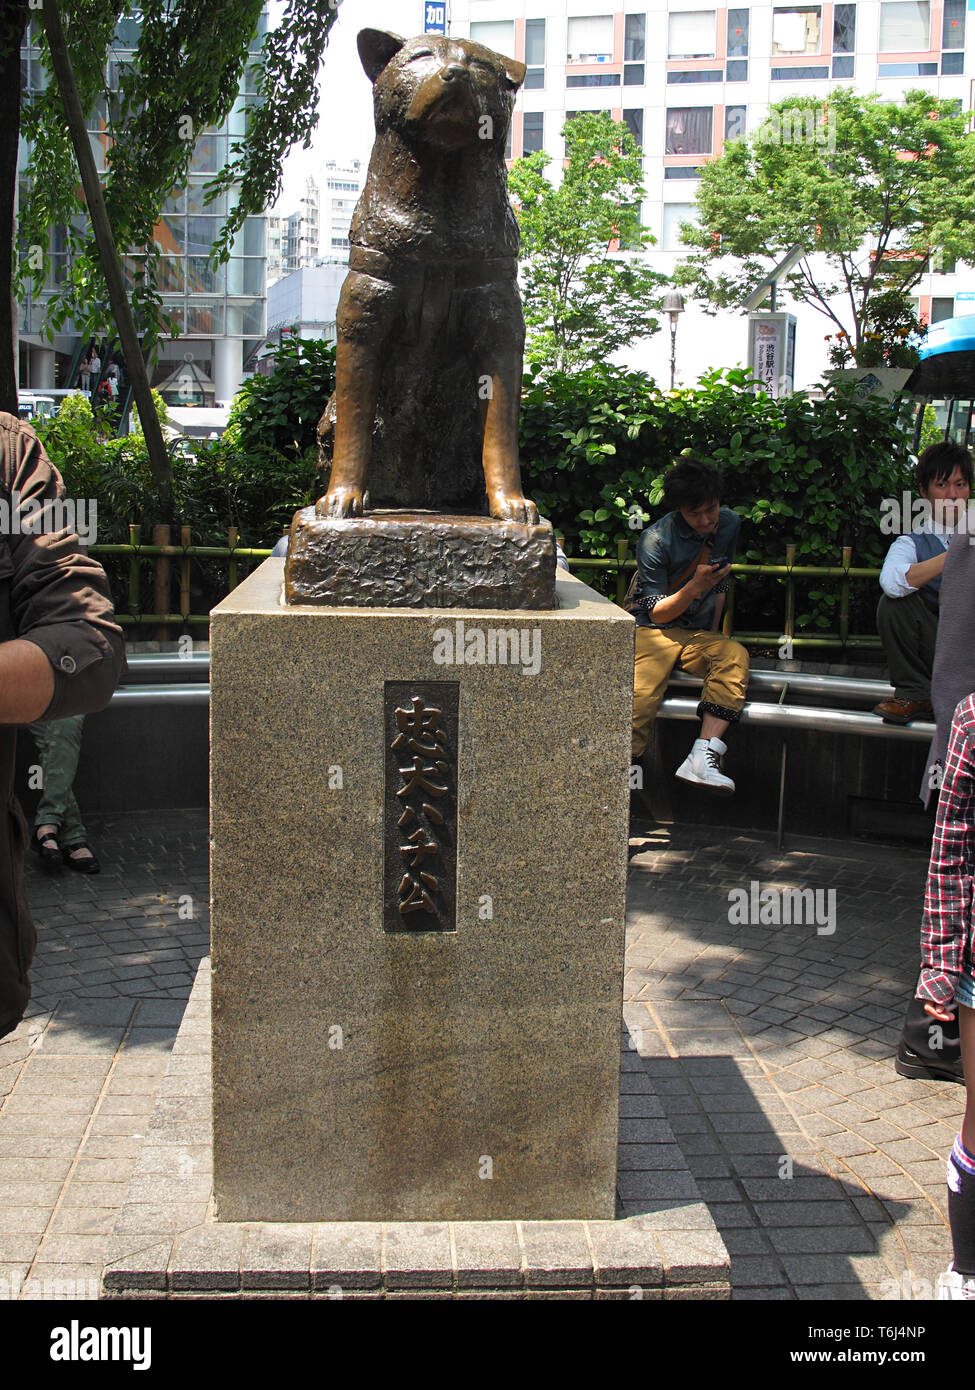 A statue of the famous dog Hachiko, outside of Shibuya Station in Shibuya, Tokyo Japan. Stock Photo